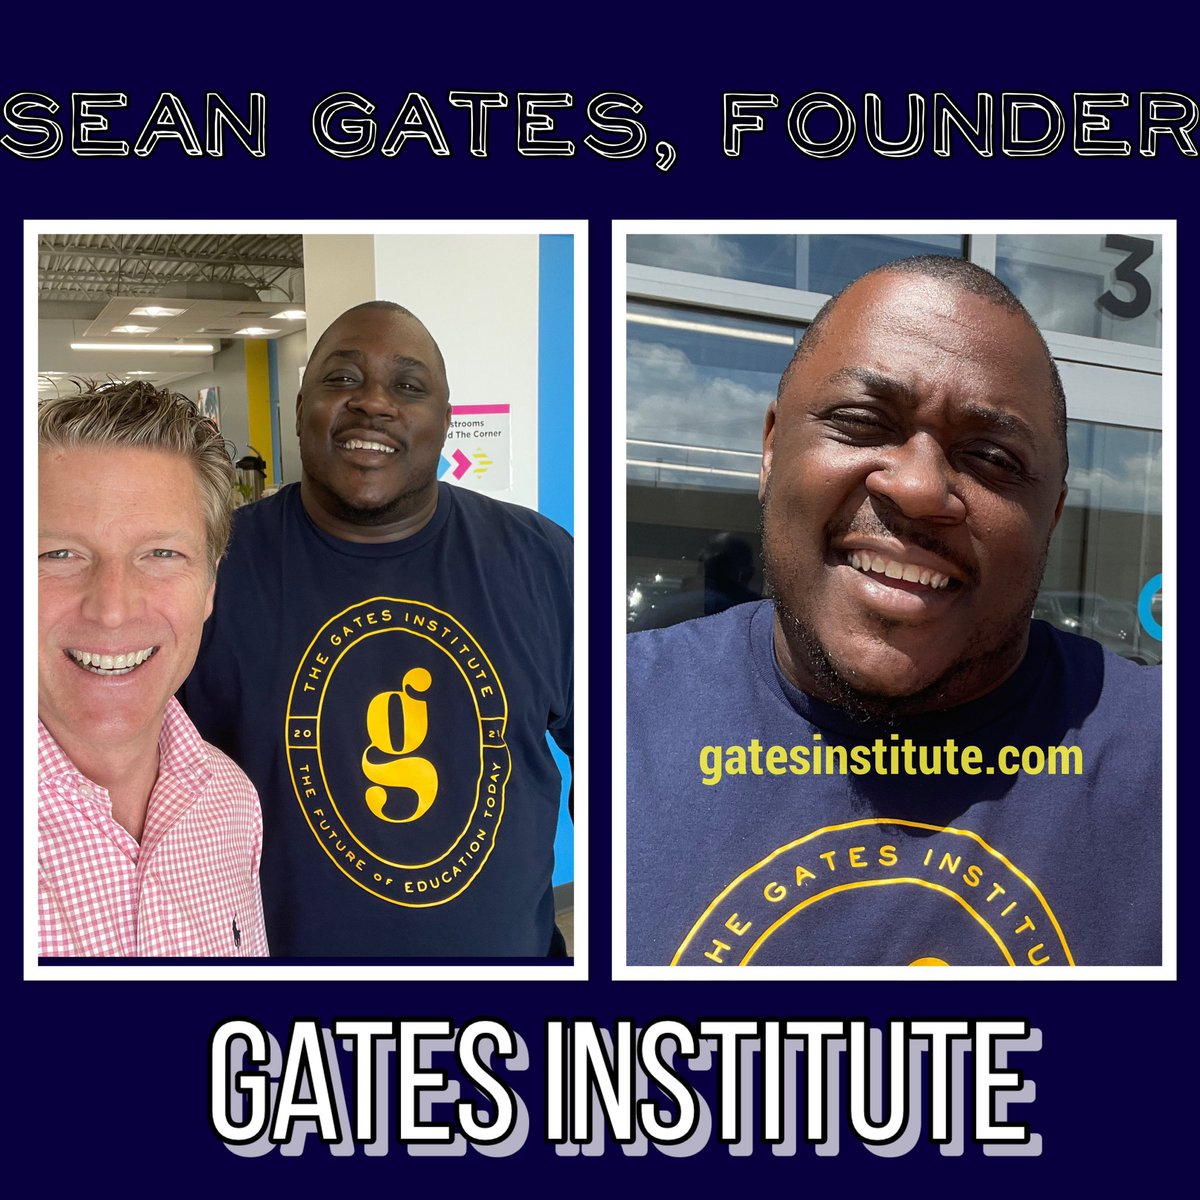 Sean Gates, Founder gatesinstitute.com is Revolutionizing #mentoring #mentorship and he is on the ictpodcast.com #doingthework #grateful